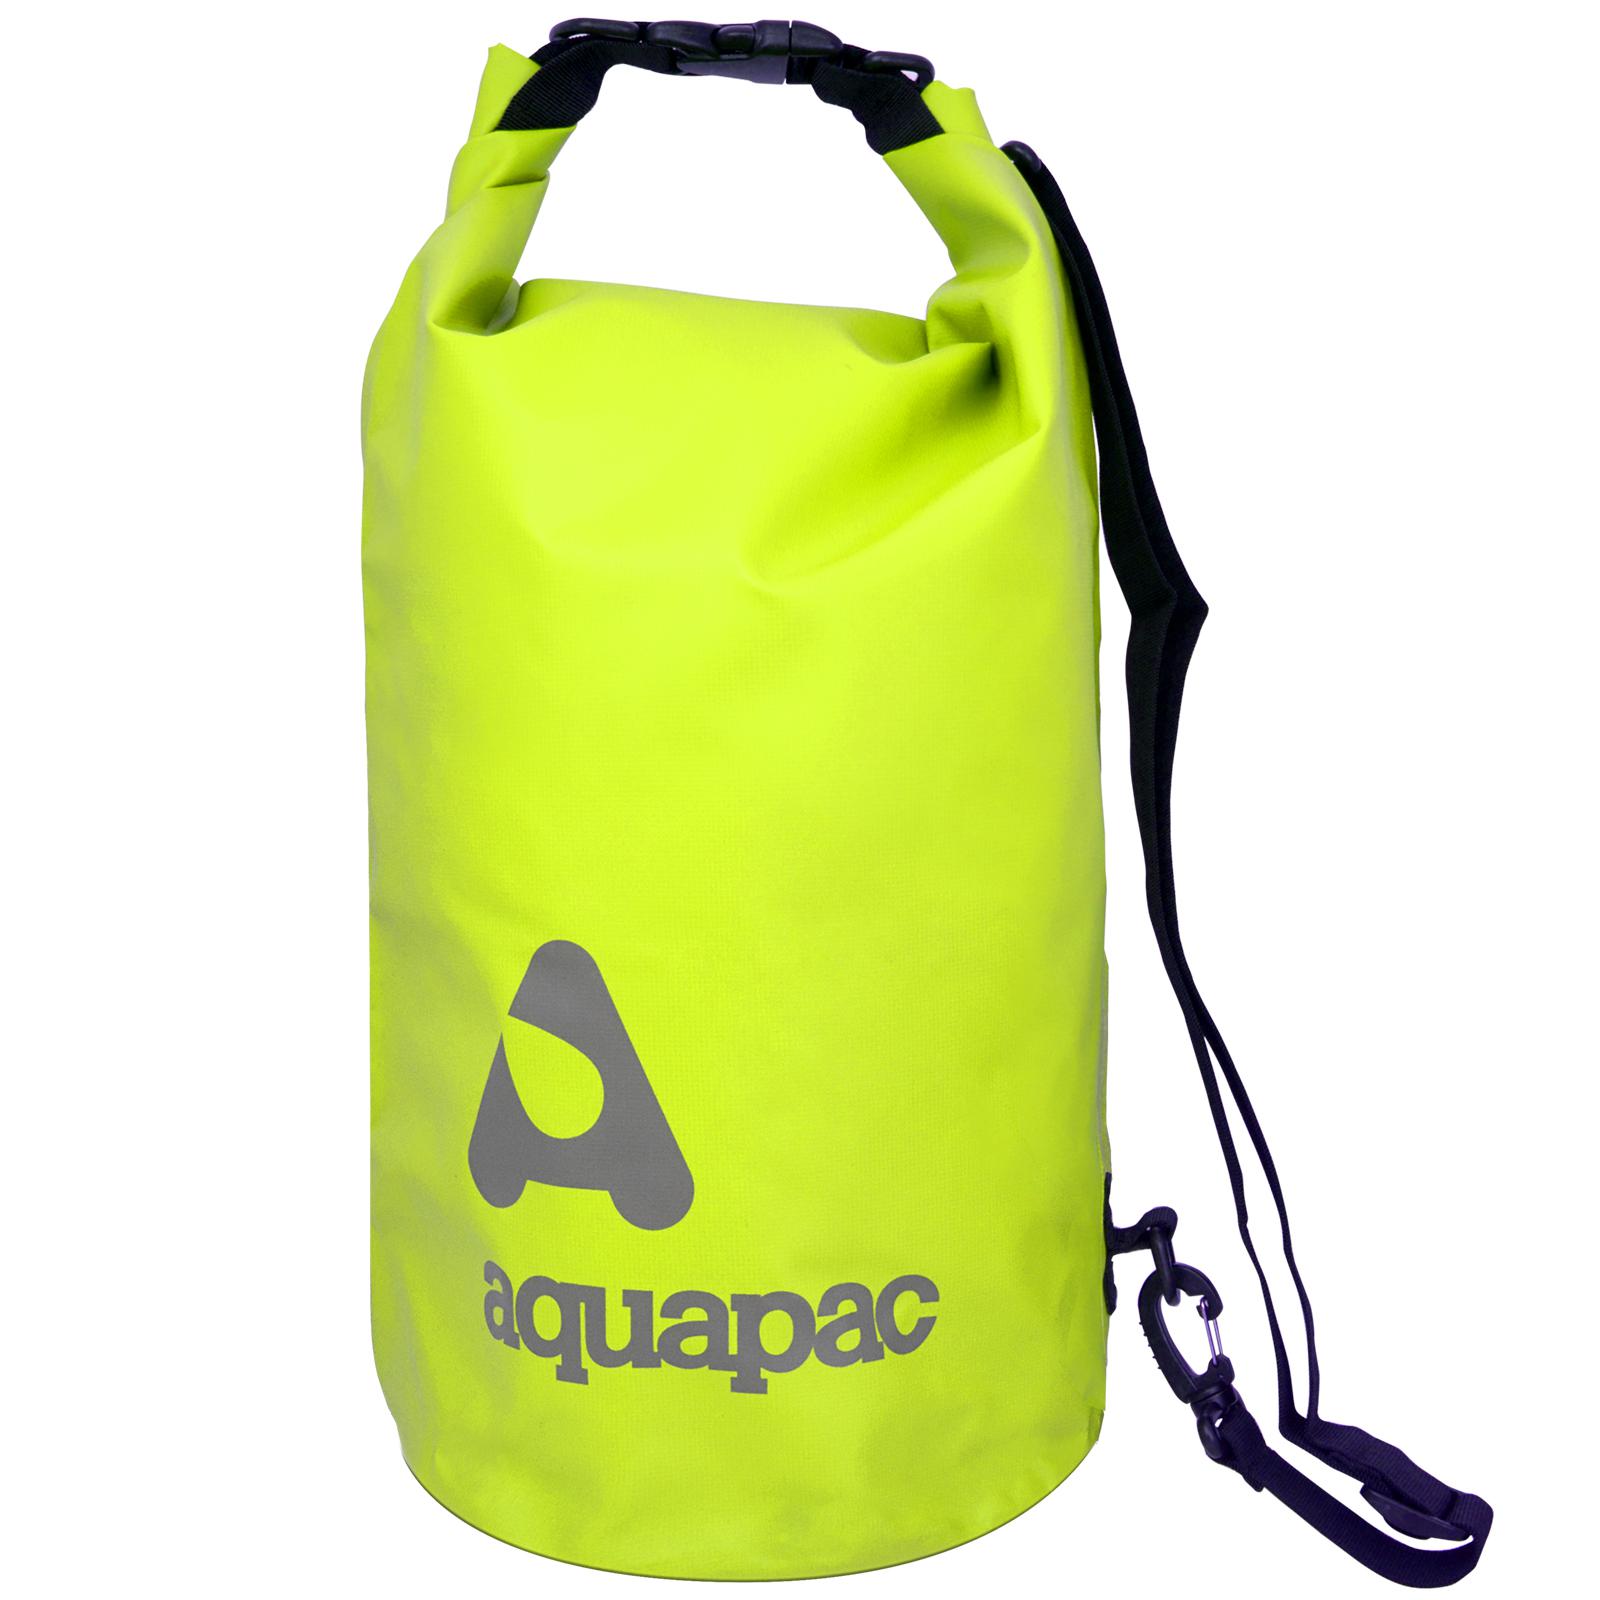 Aquapac Trailproof 25L Waterproof Dry Bag | Green